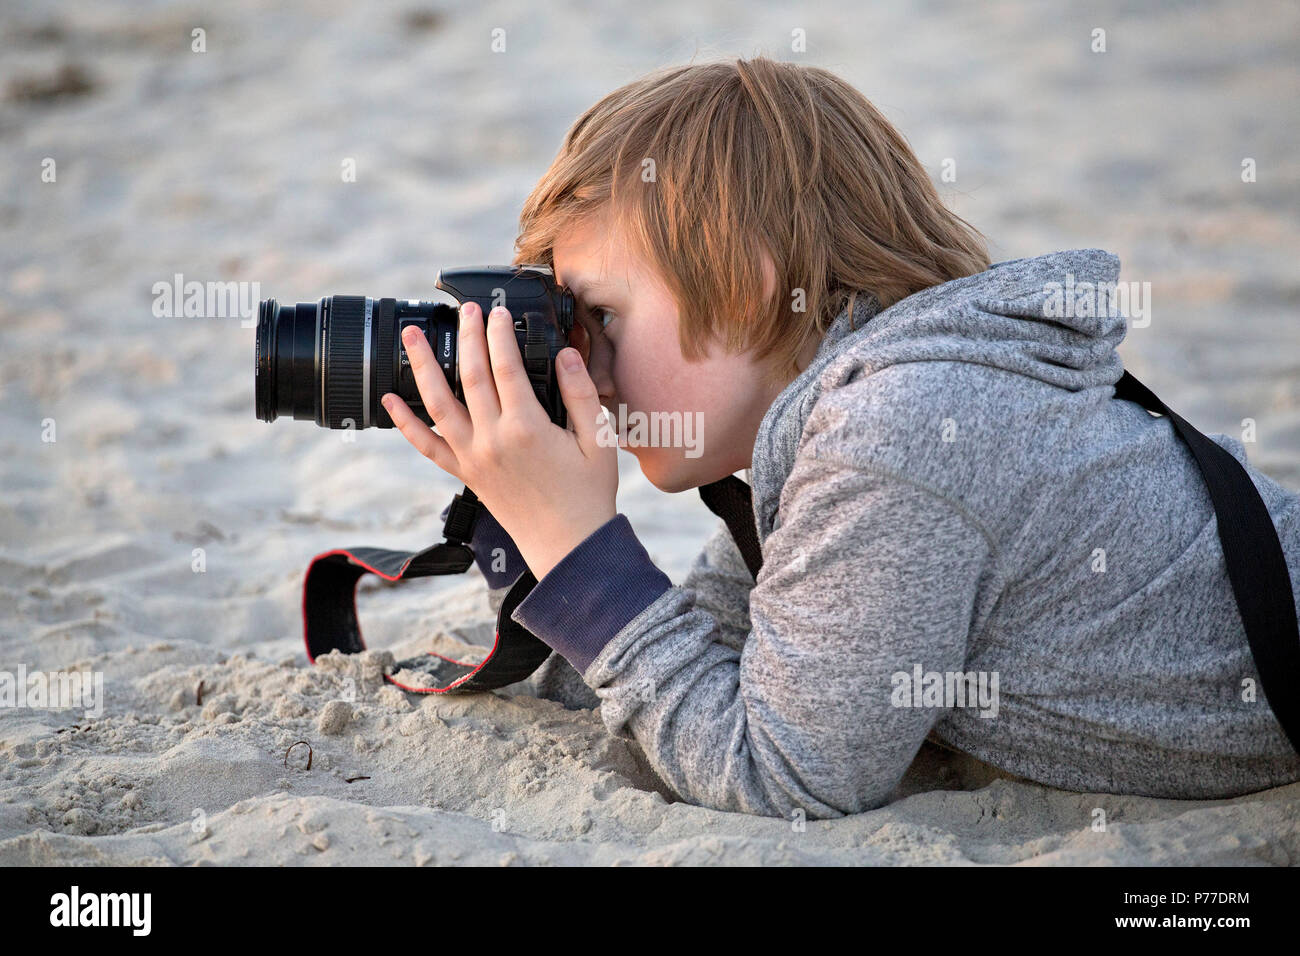 young boy taking photos at a beach Stock Photo